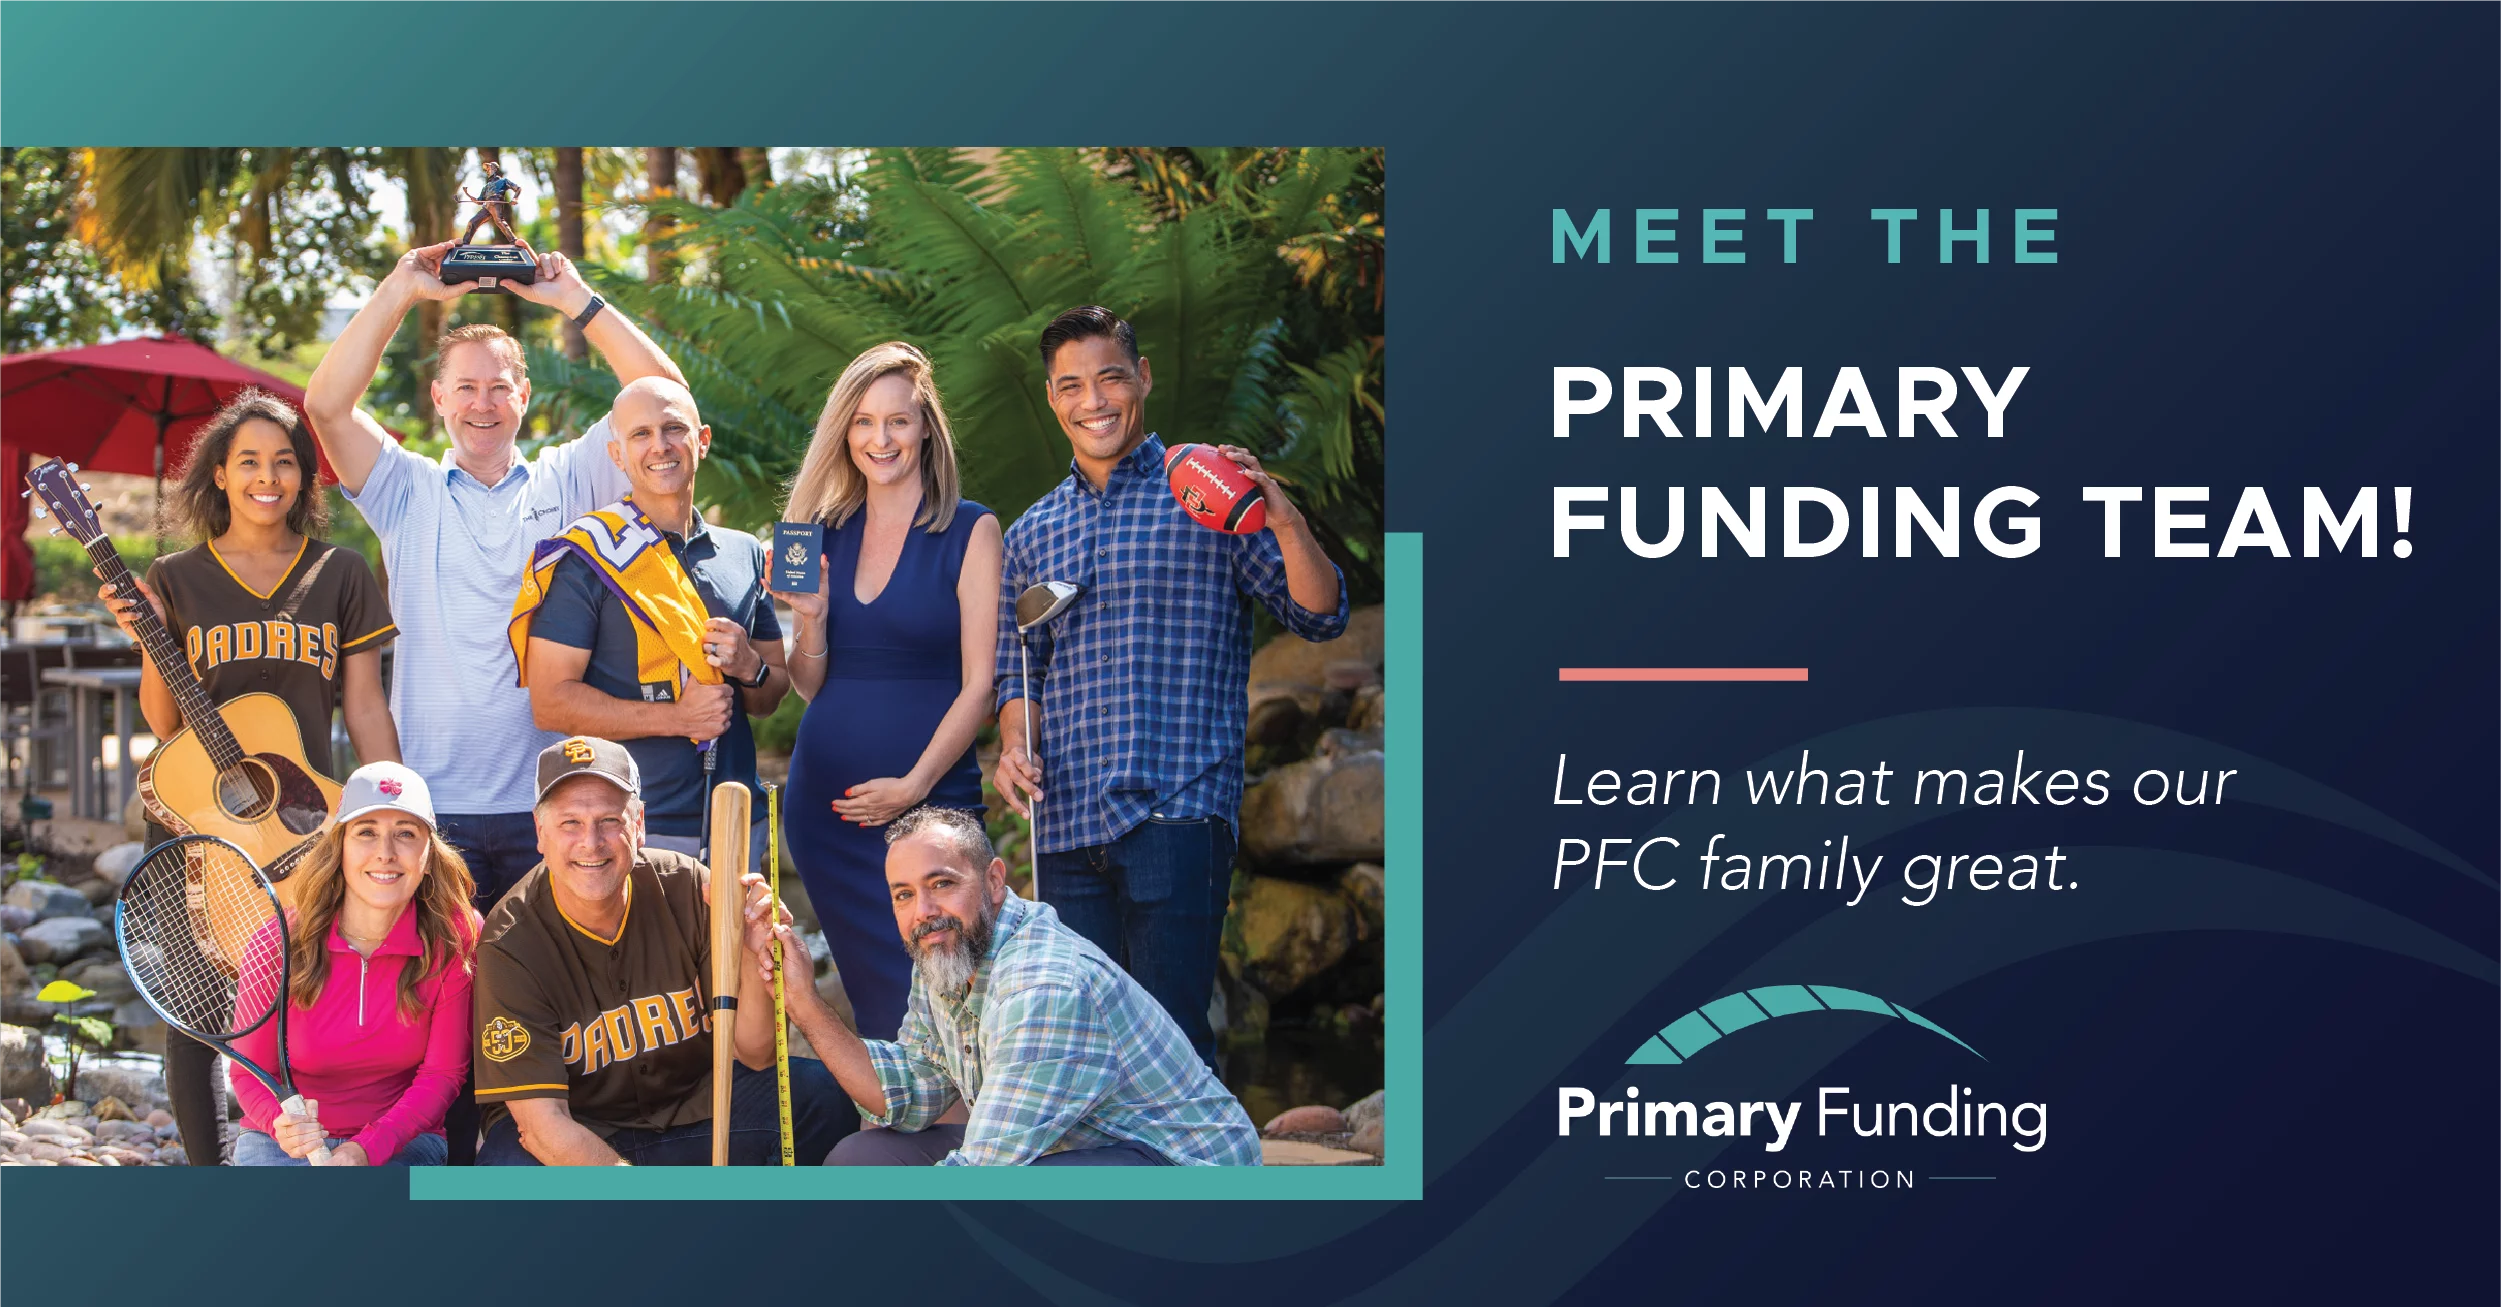 Meet the Primary Funding Team